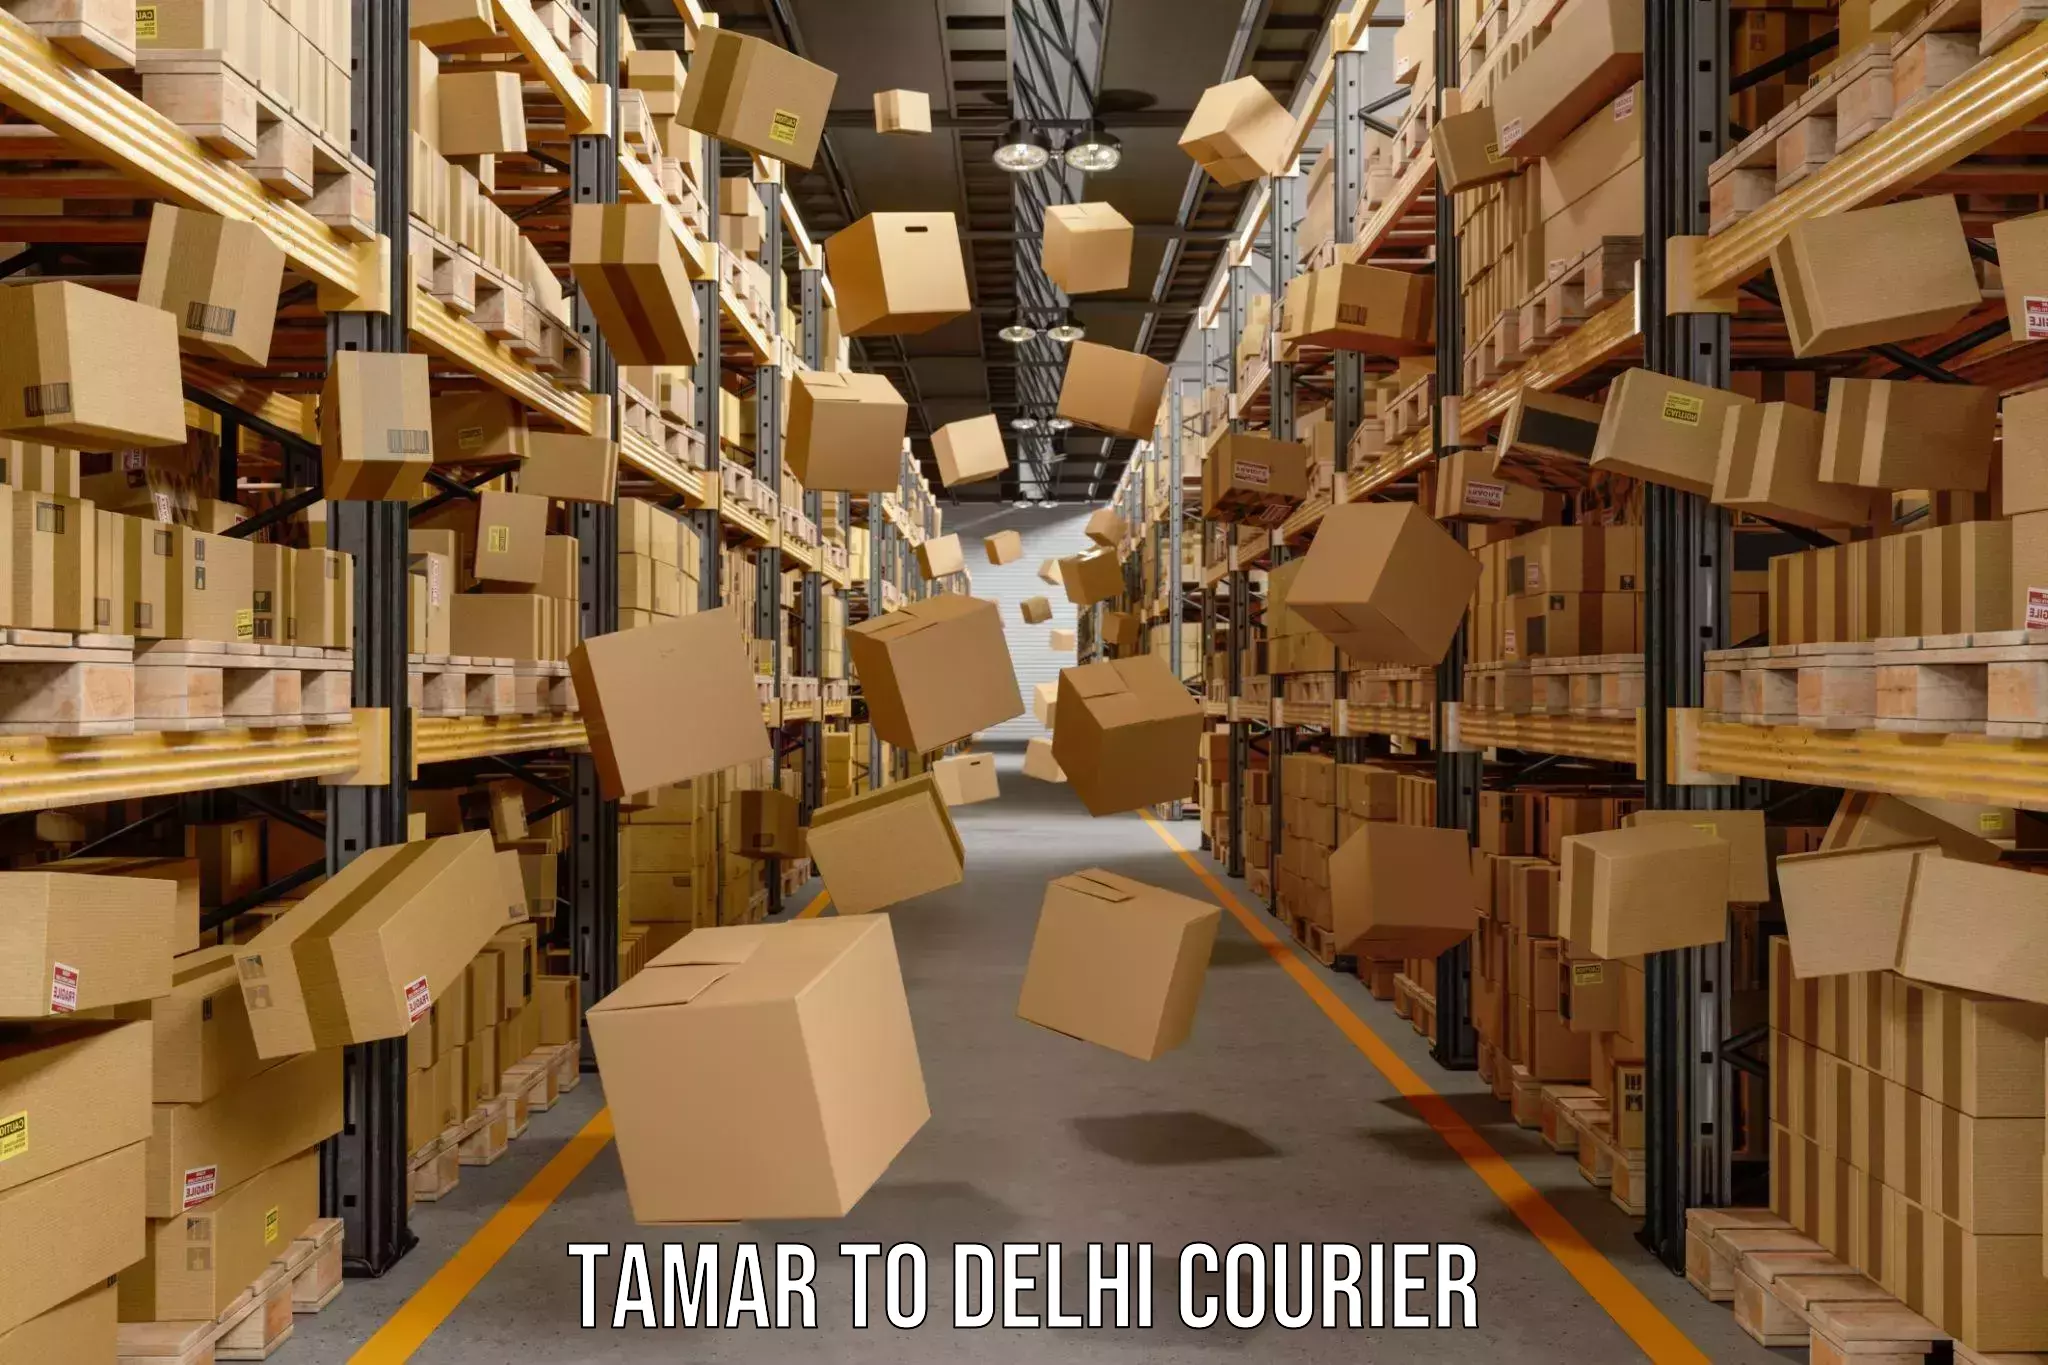 Local delivery service Tamar to Delhi